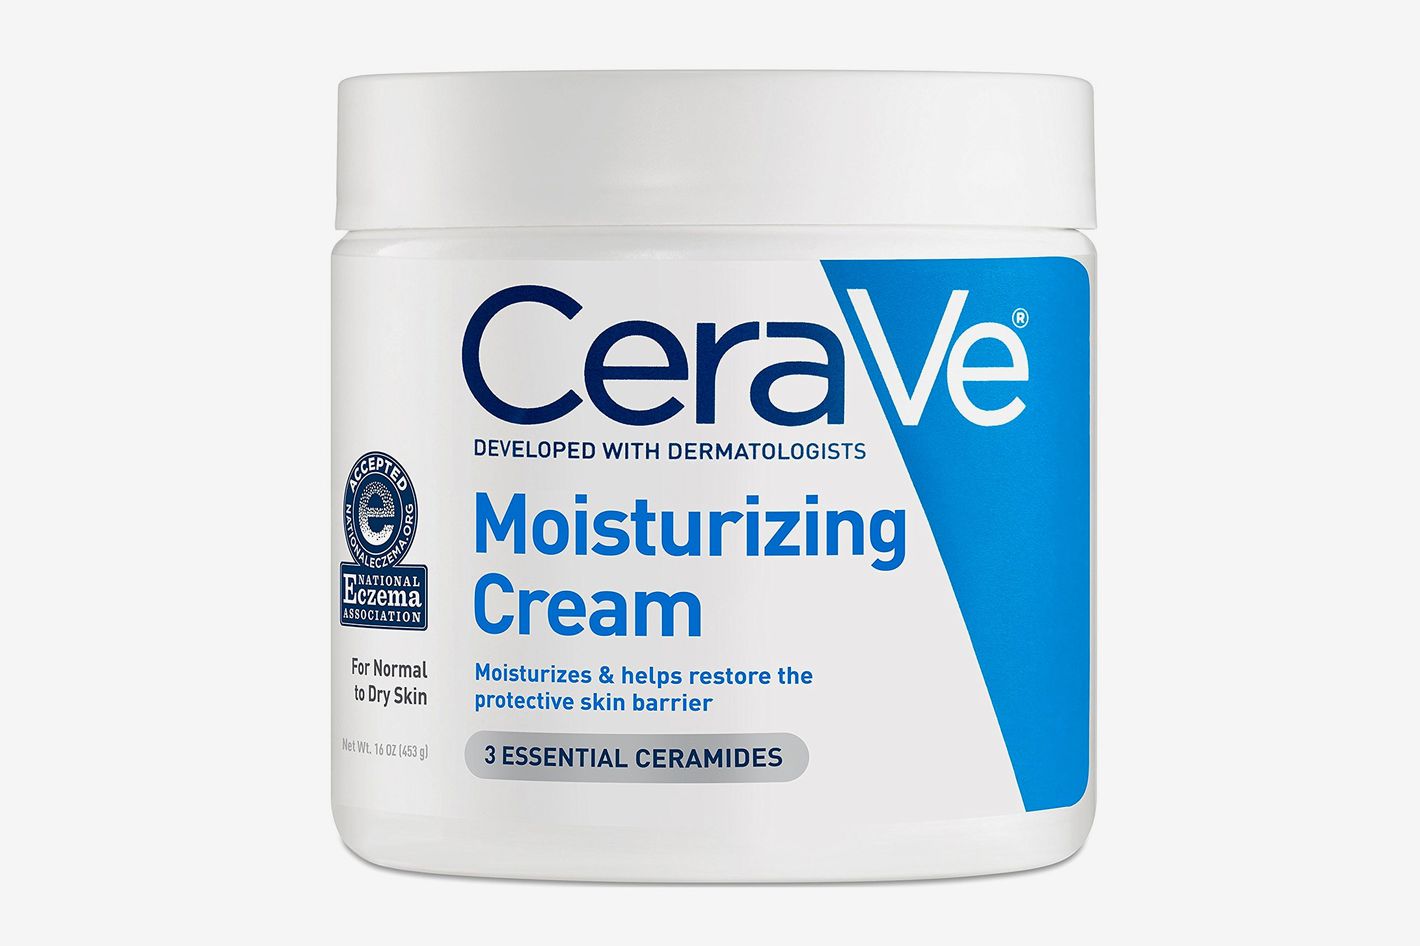 heal tobacco documentary cerave moisturizing cream for eczema Easy to ...